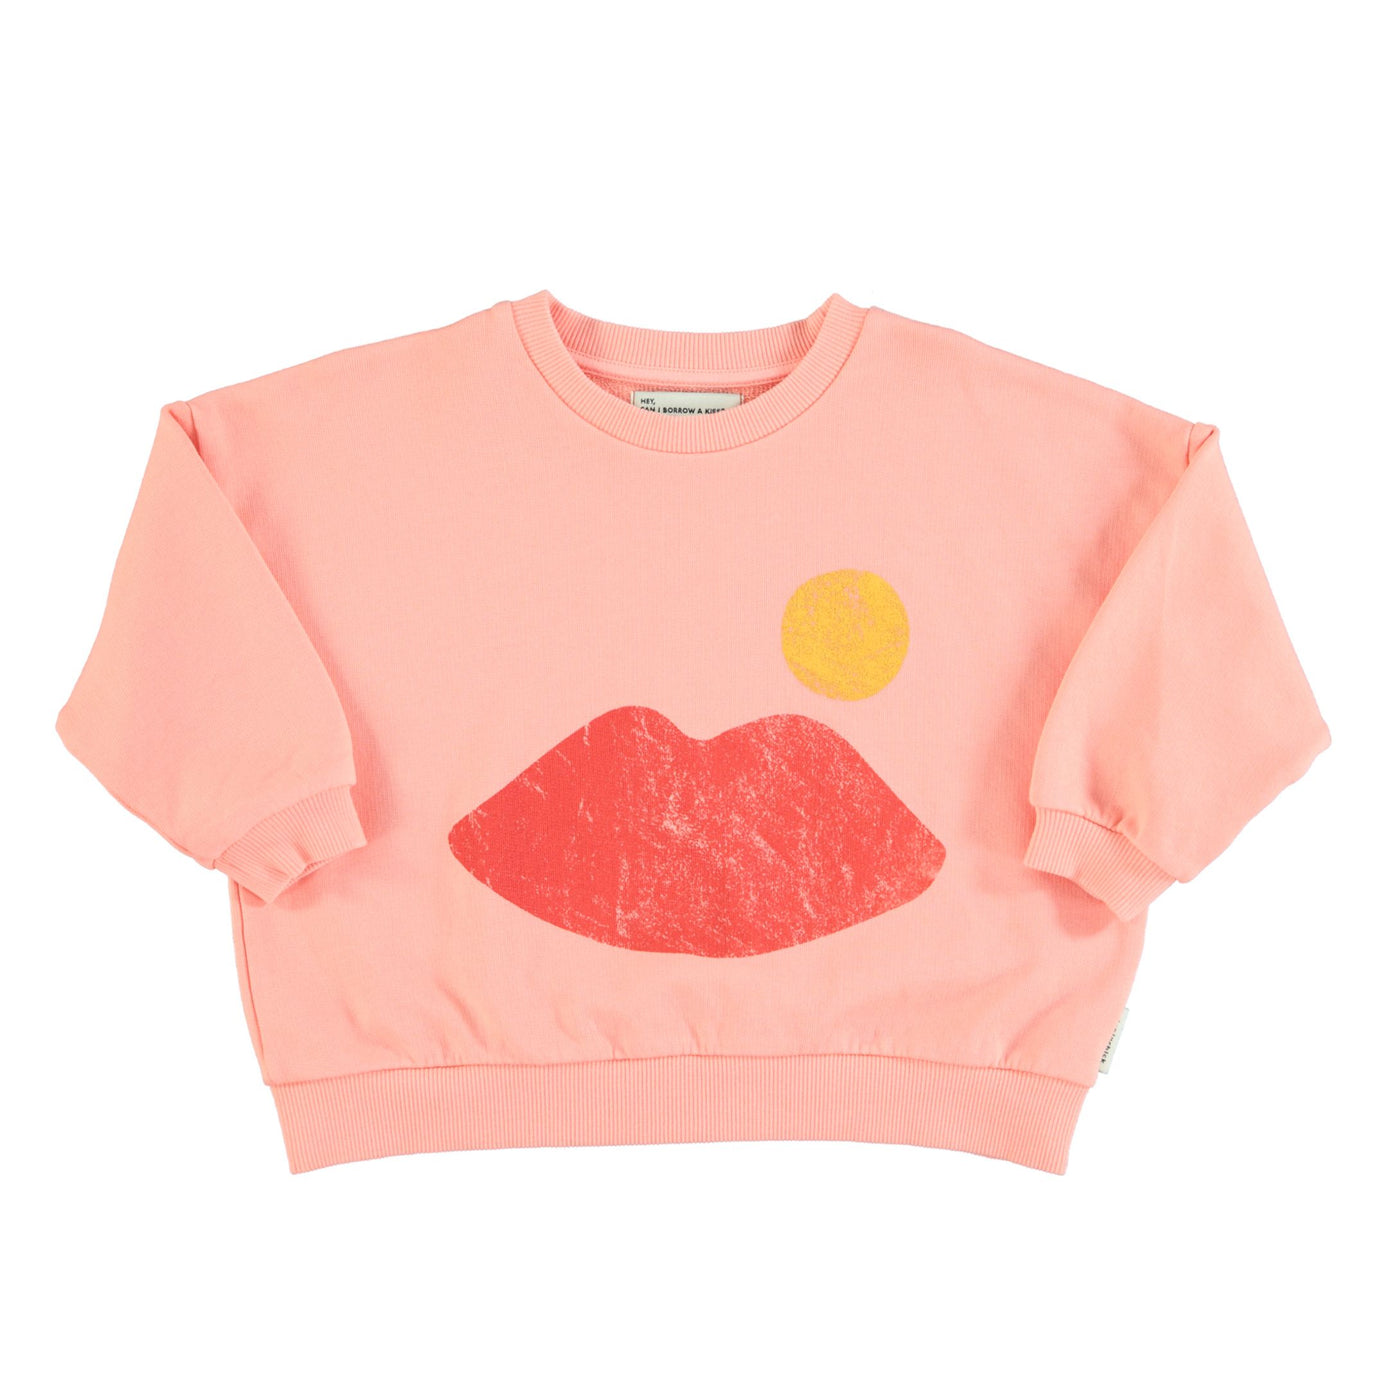 Piupiuchick sweatshirt coral w/ lips print